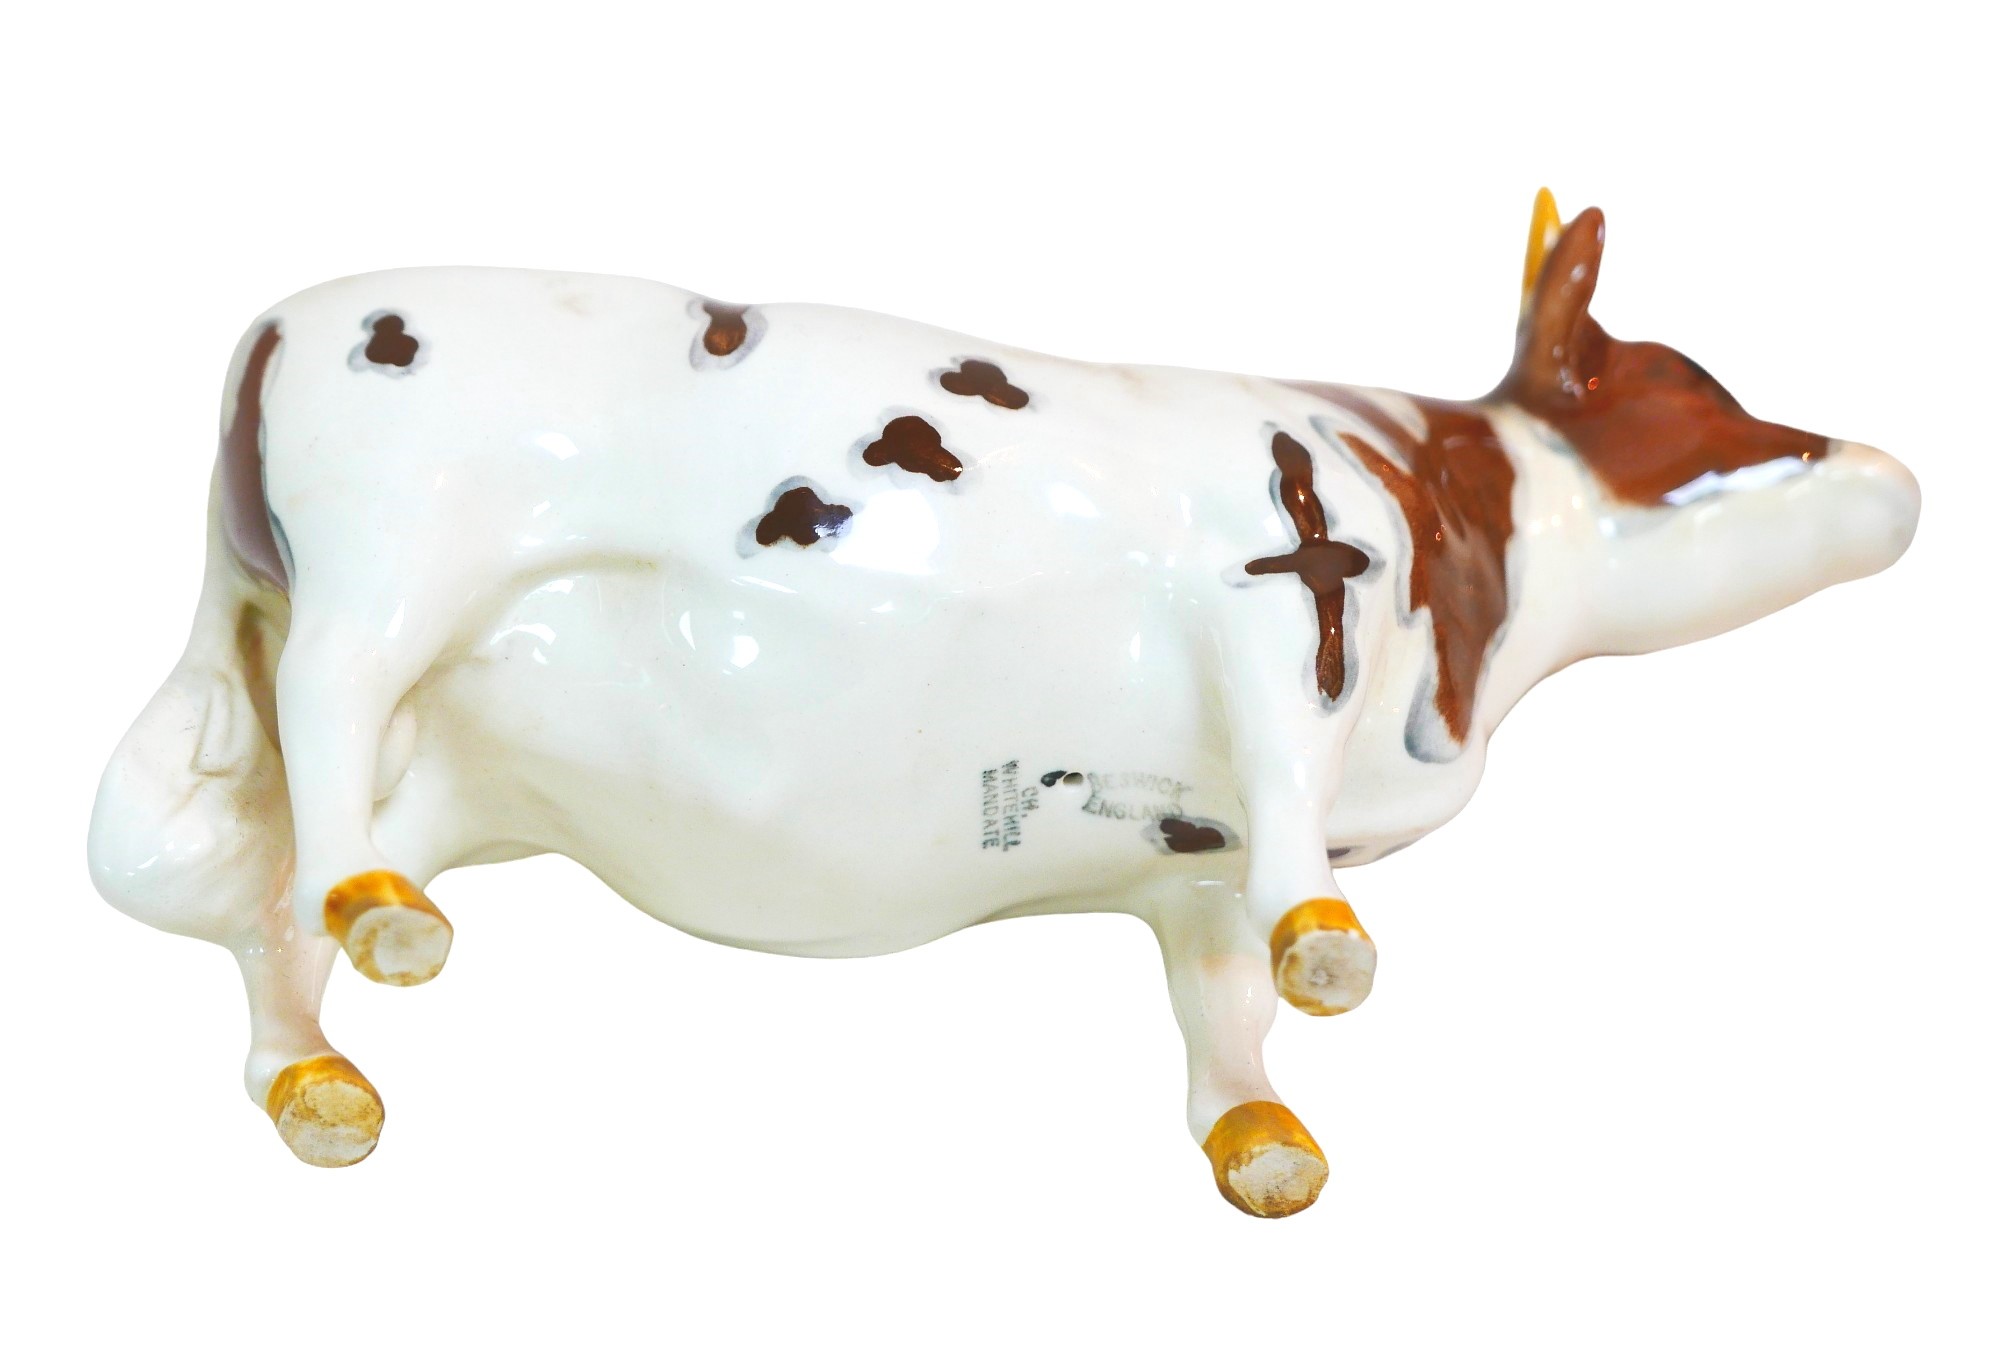 A Beswick Ayreshire Bull figurine, 'Ch. Whitehill Mandate' to its base. - Image 5 of 5